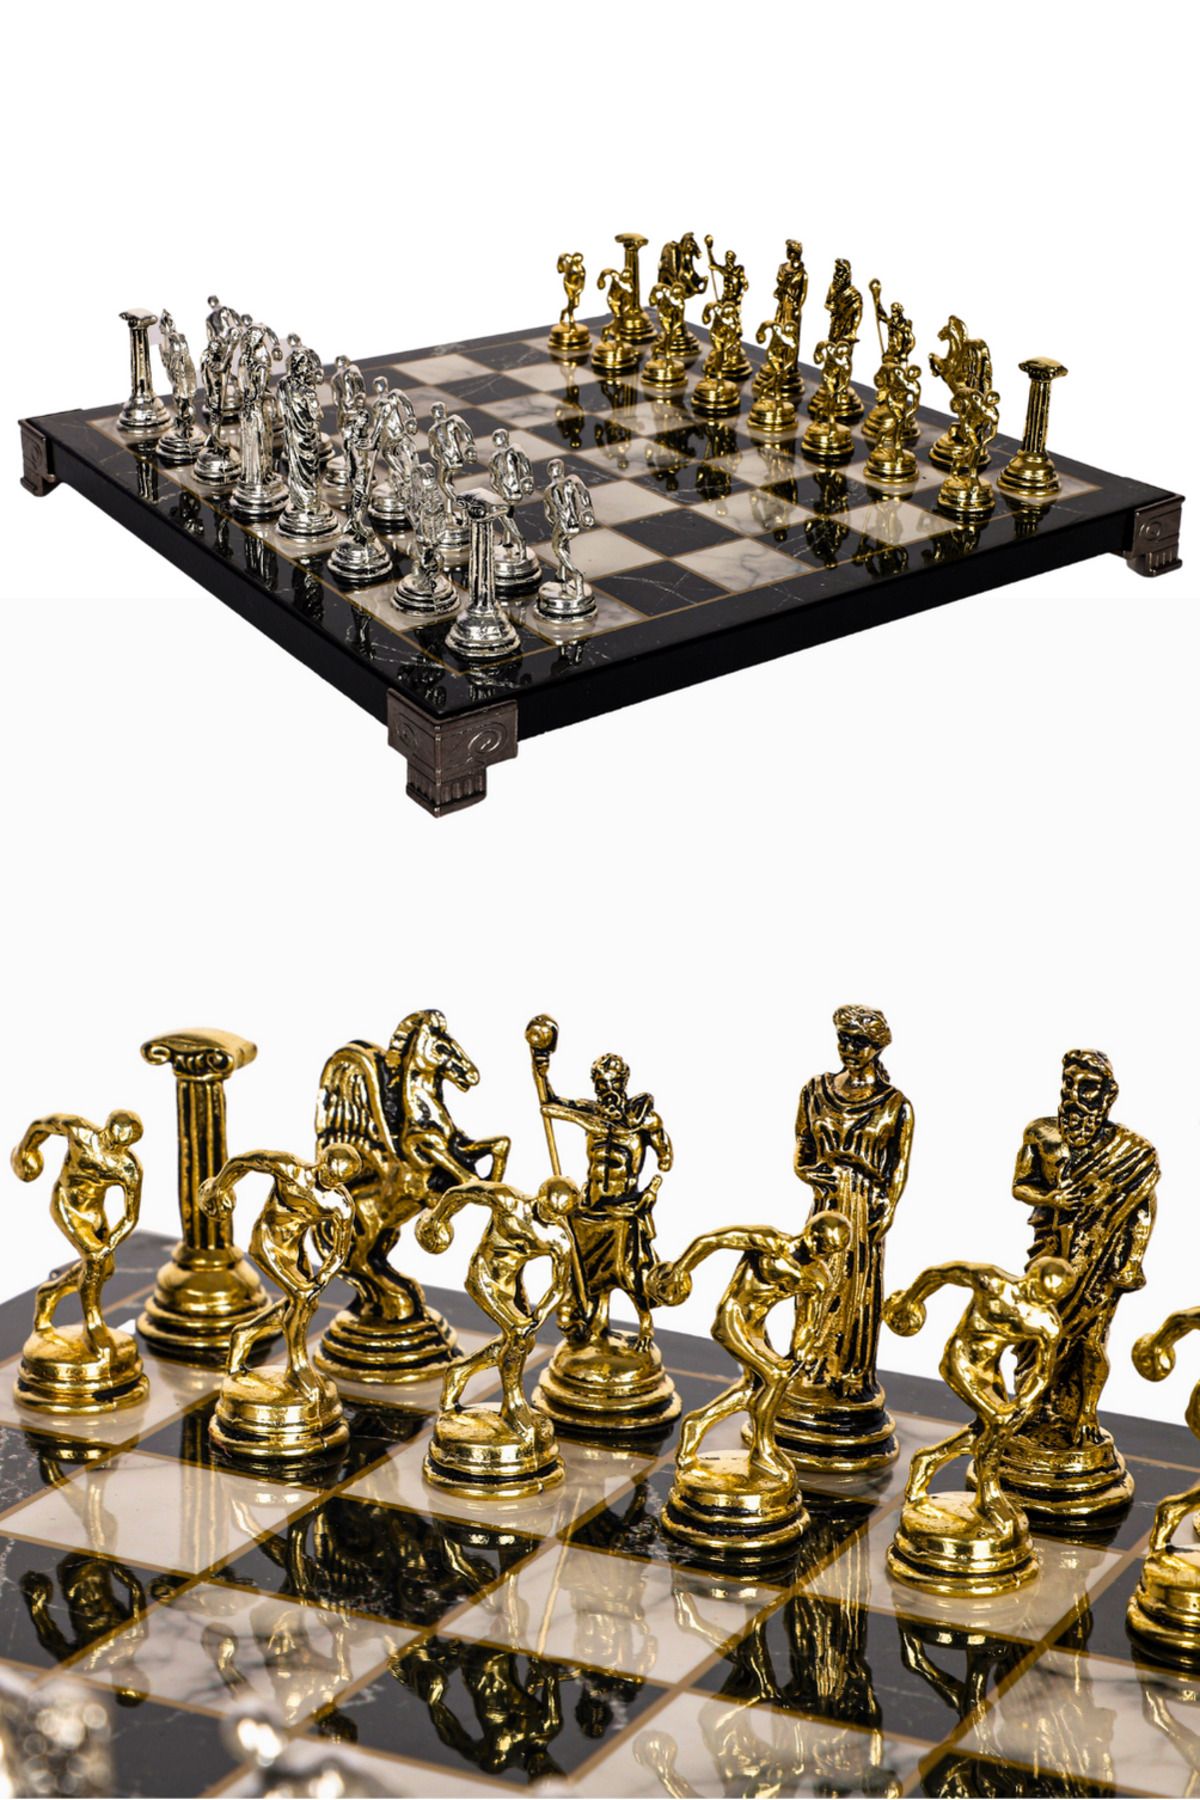 Cooper Chess Metal Satranç Takımı | 25cm Mermer Desenli Satranç Tahtası | Mitolojik Tanrı Figürlü Discus Olimpik